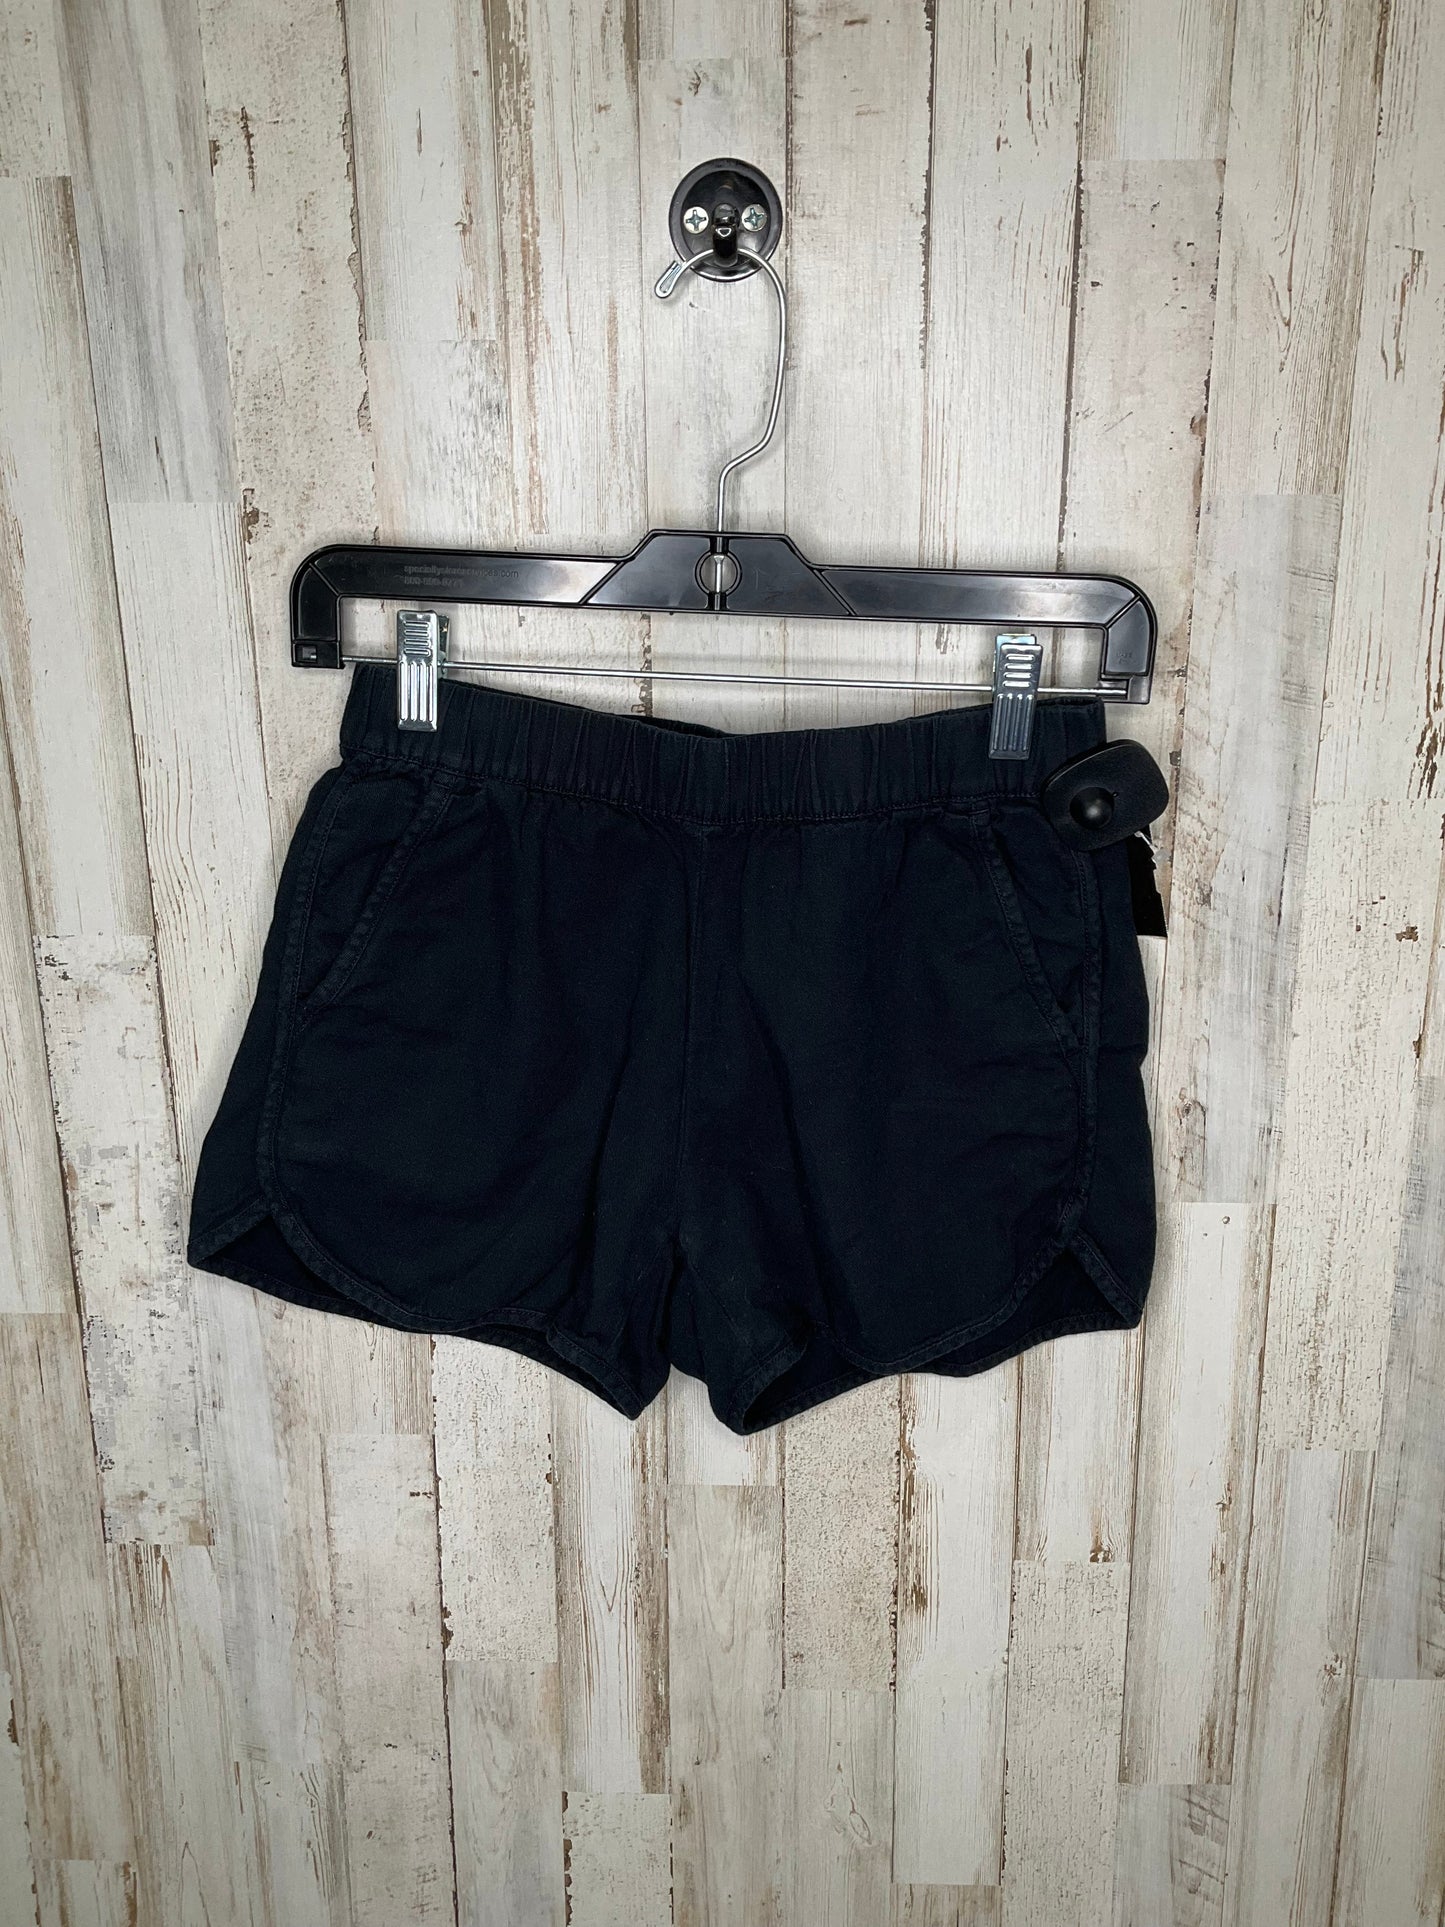 Black Shorts Madewell, Size Xxs